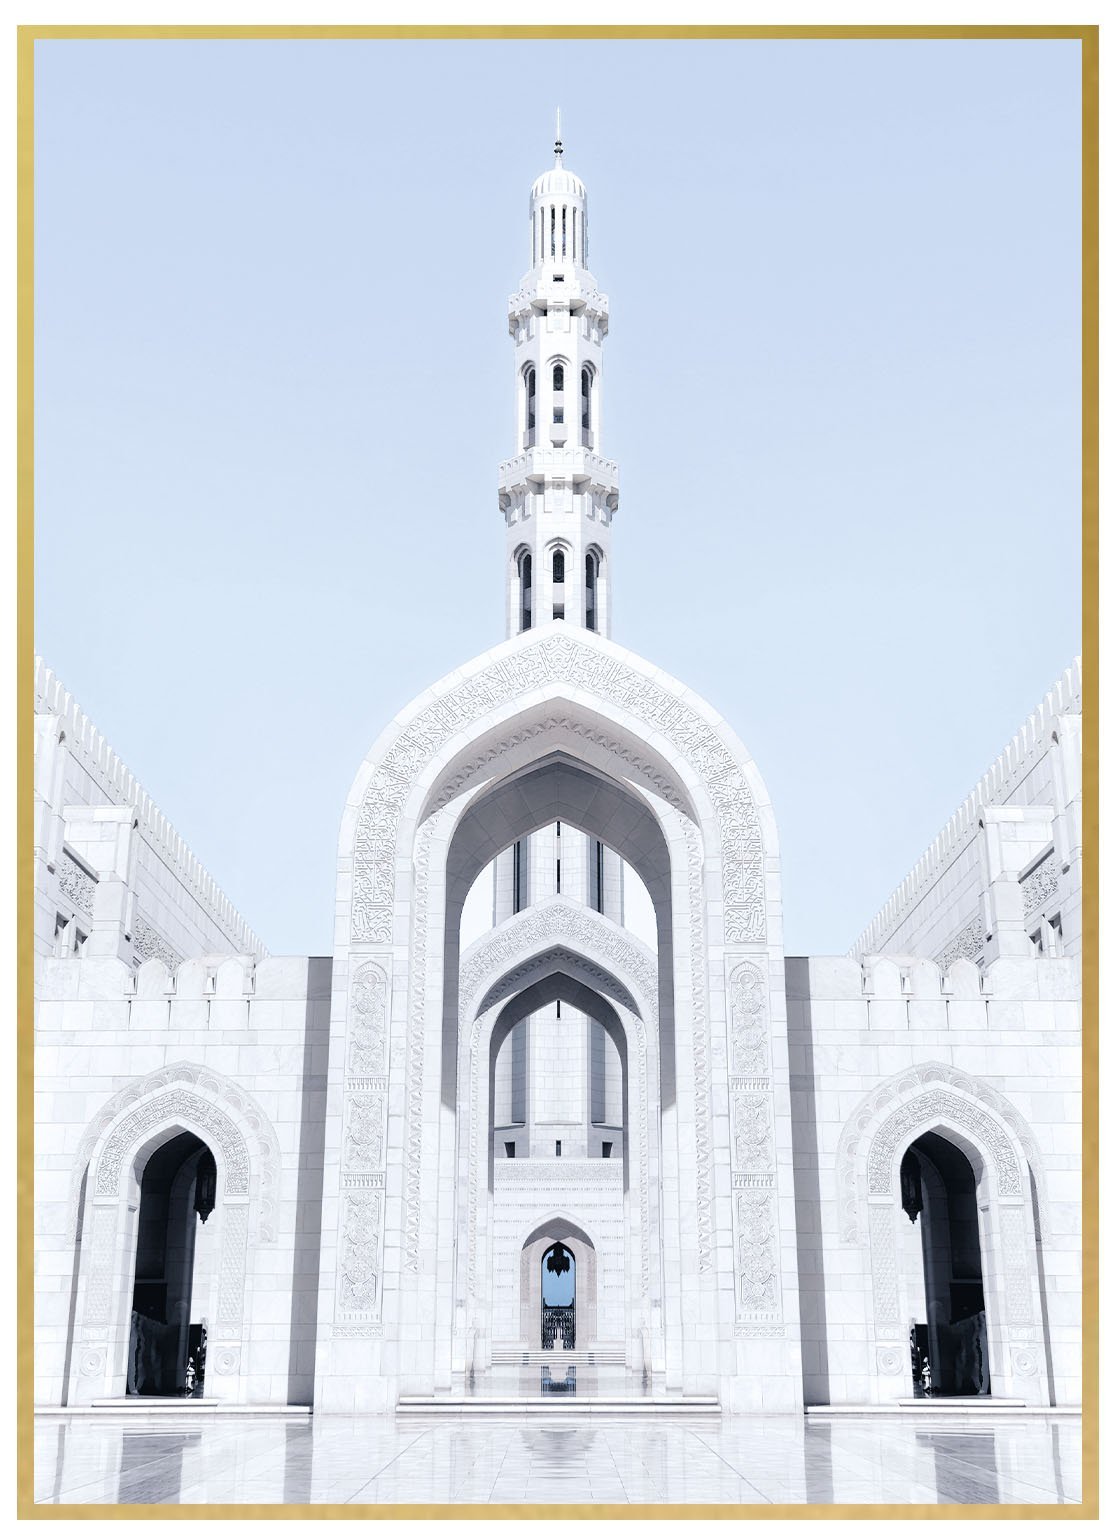 Qaboos Mosque - Avemfactory